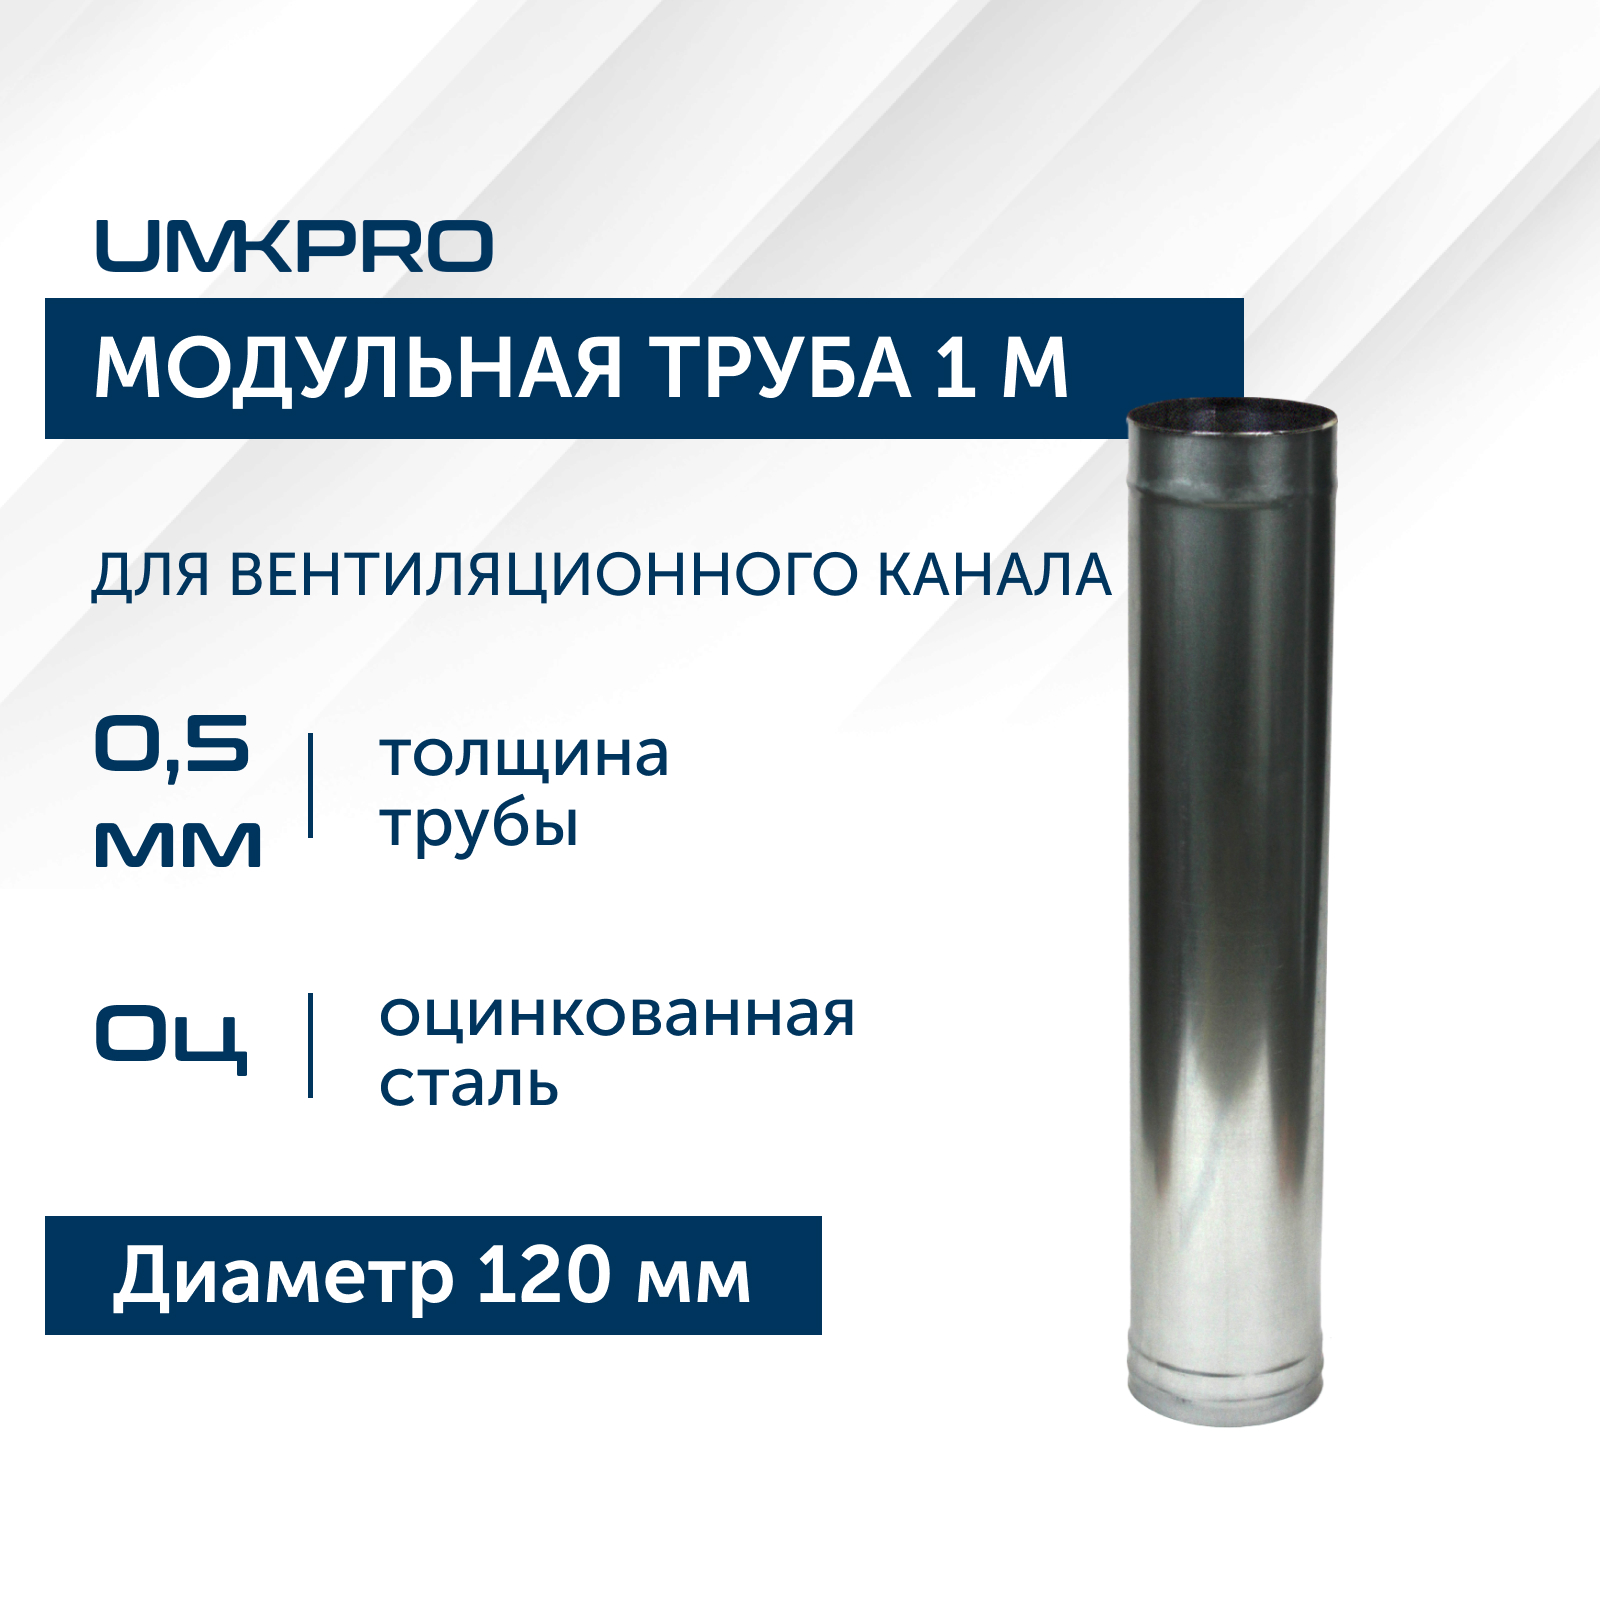 Труба модульная для дымохода 1 м UMKPRO D 120, Оц/0,5мм модульная прихожая гарун комплектация 4 арктика